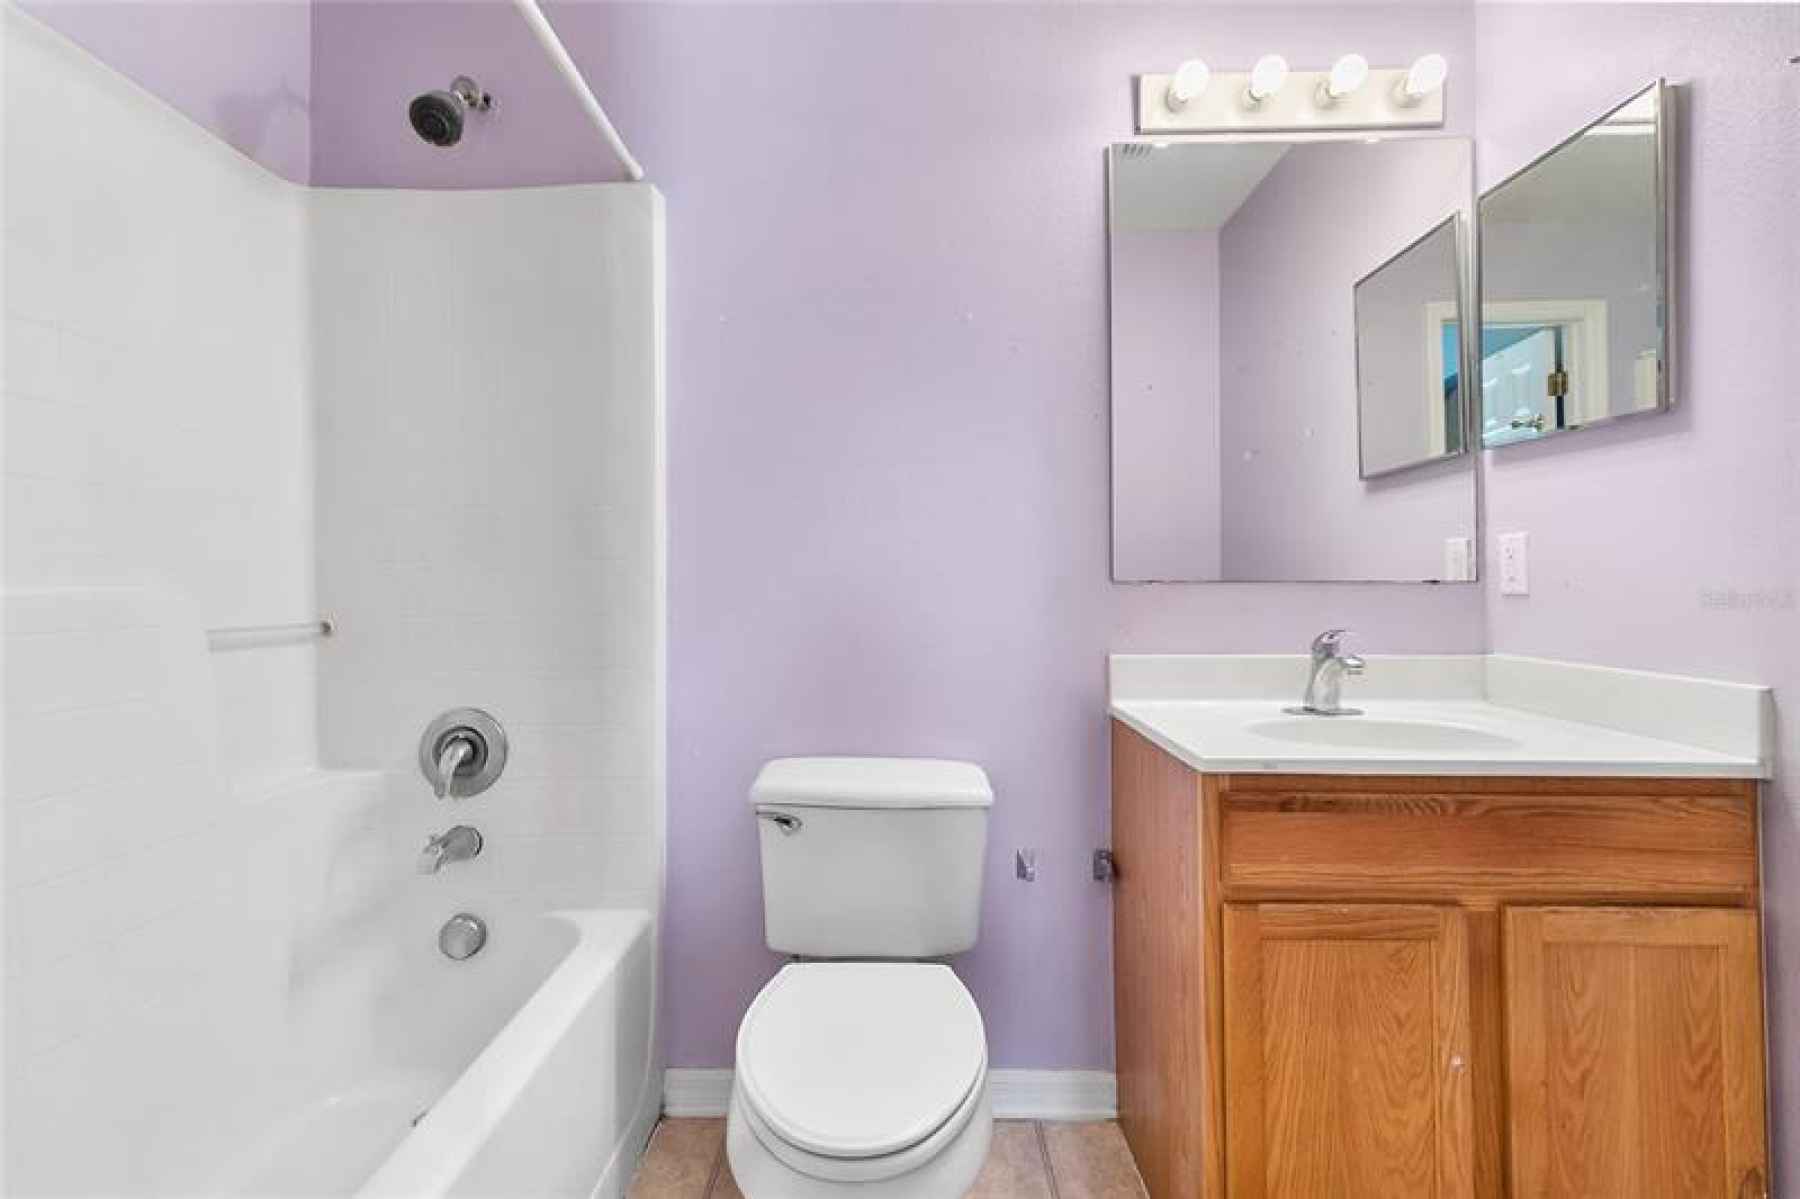 En suite bathroom provides owner privacy.